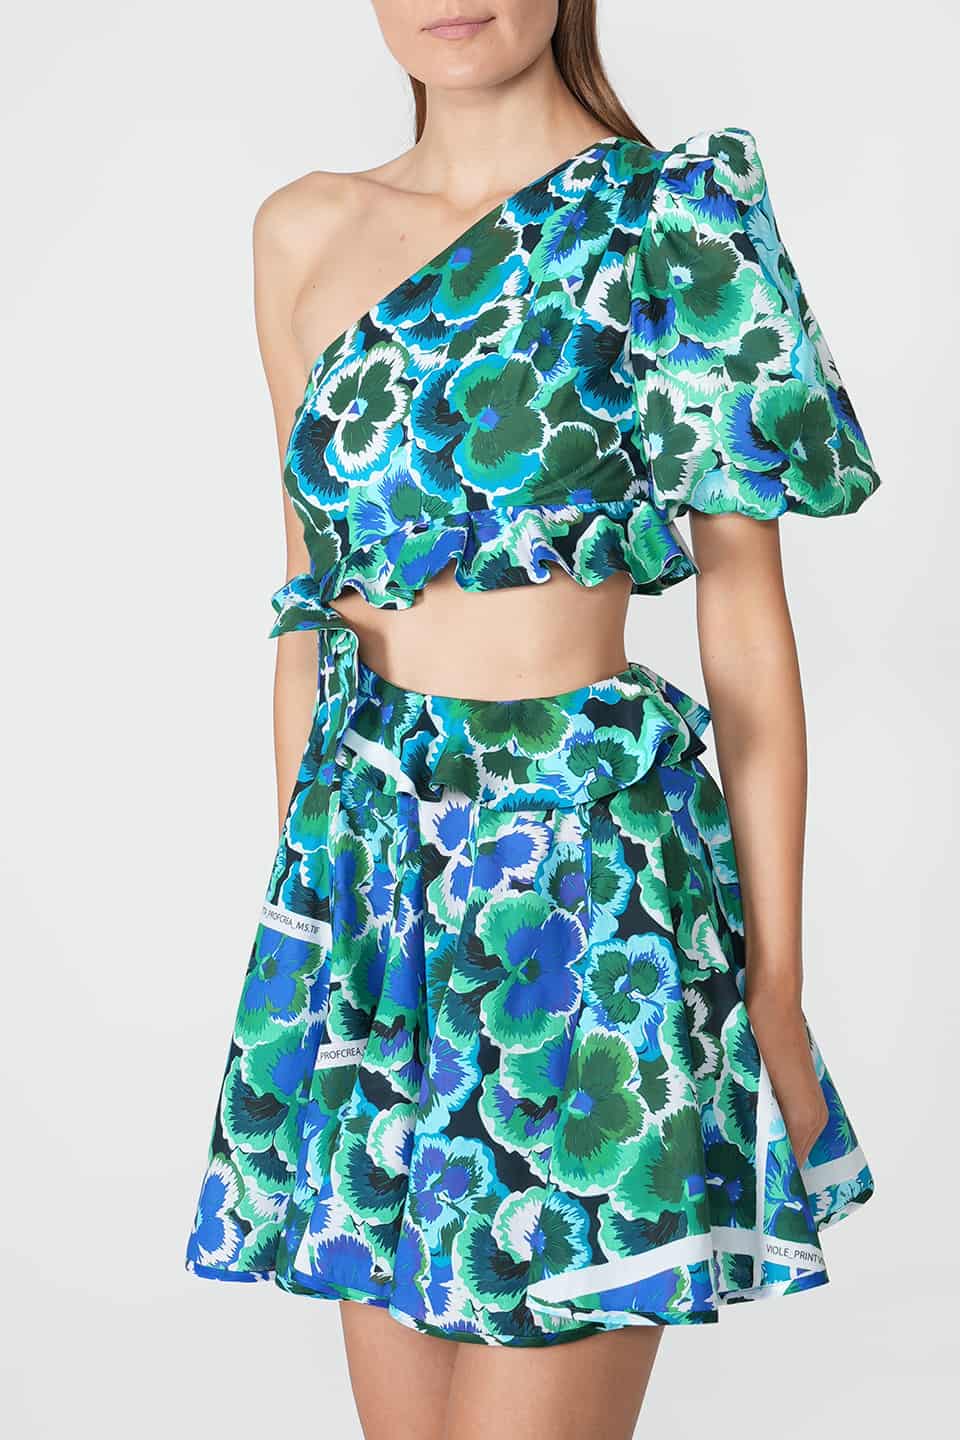 Shop online trendy Green Mini dresses from Vivetta Fashion designer. Product gallery 1